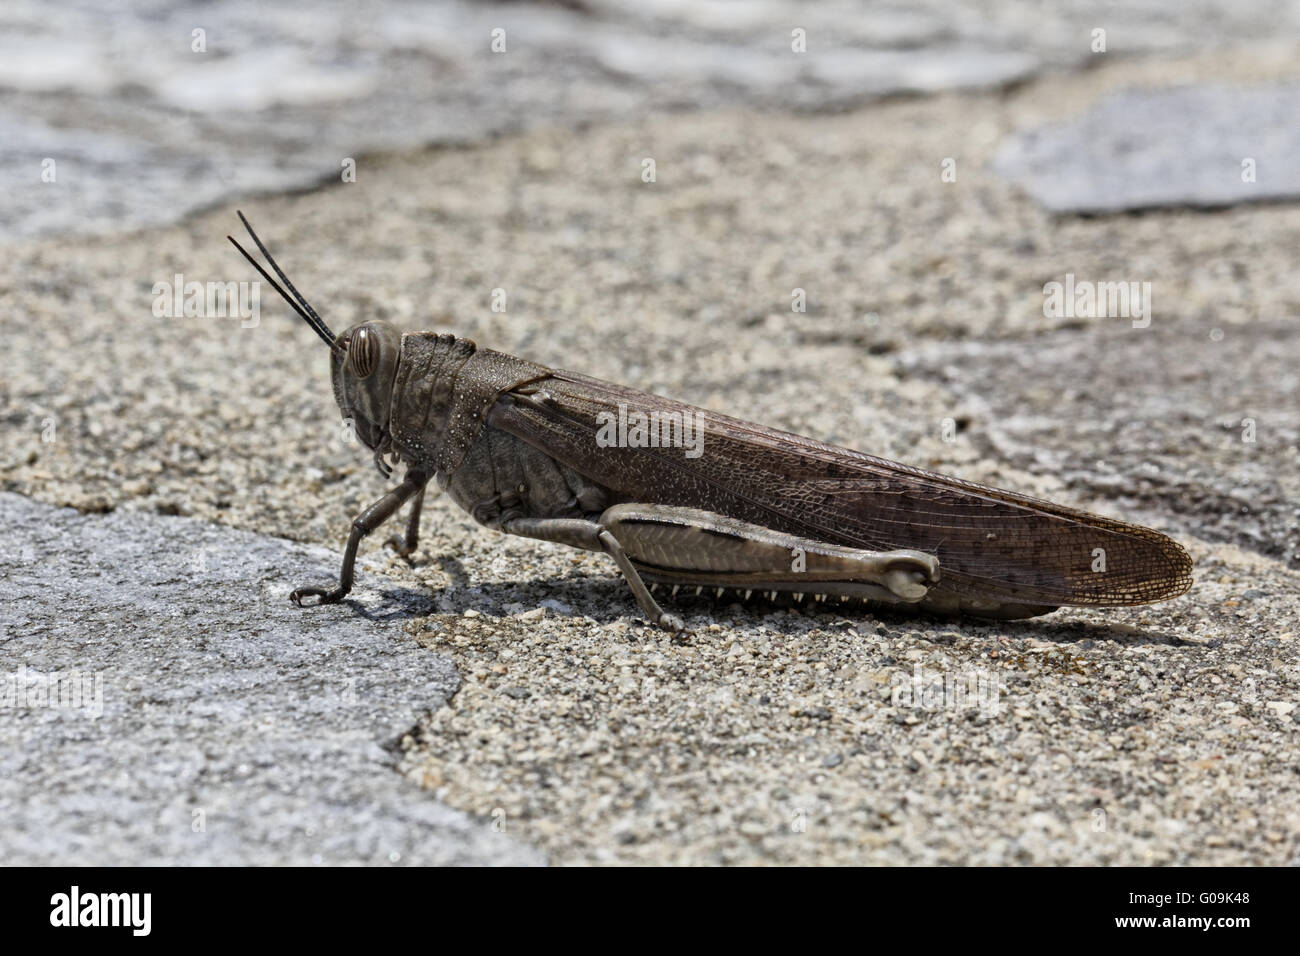 Anacridium aegypticum, Egyptian Locust Grasshopper Stock Photo